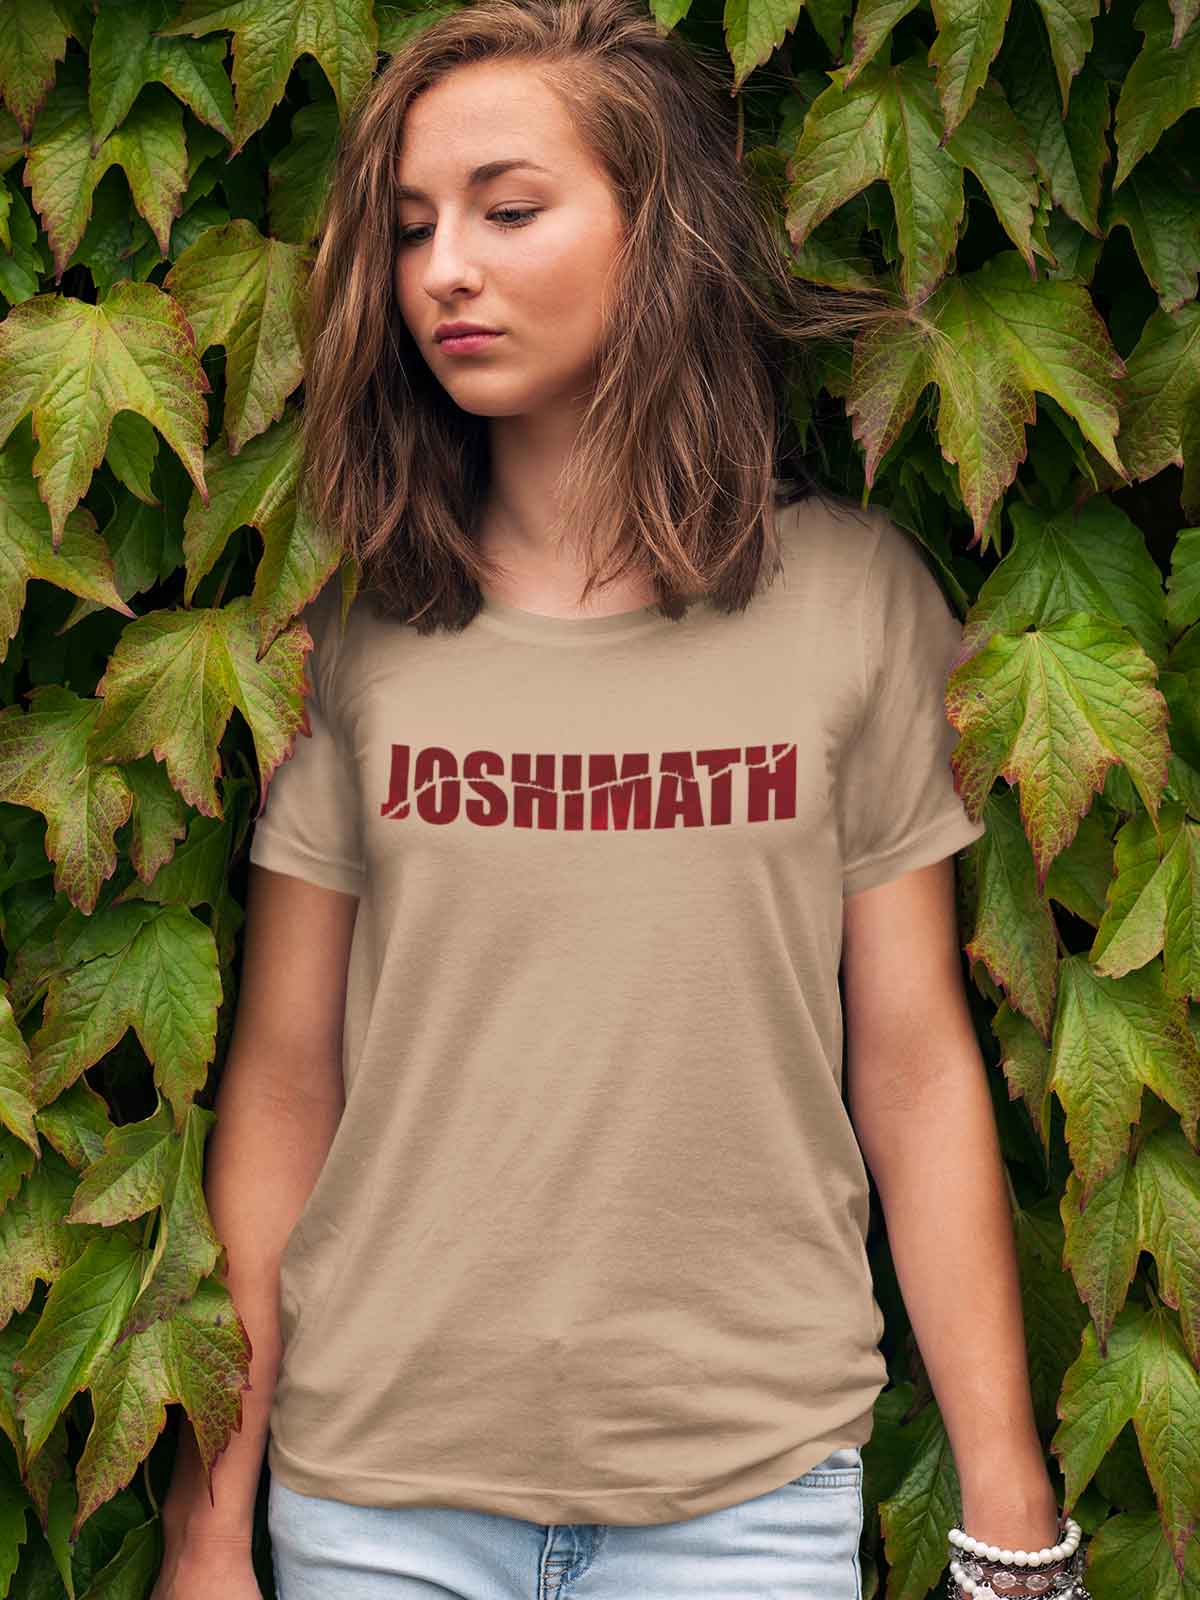 Joshimath-printed-t-shirt-for-women by Ghumakkad